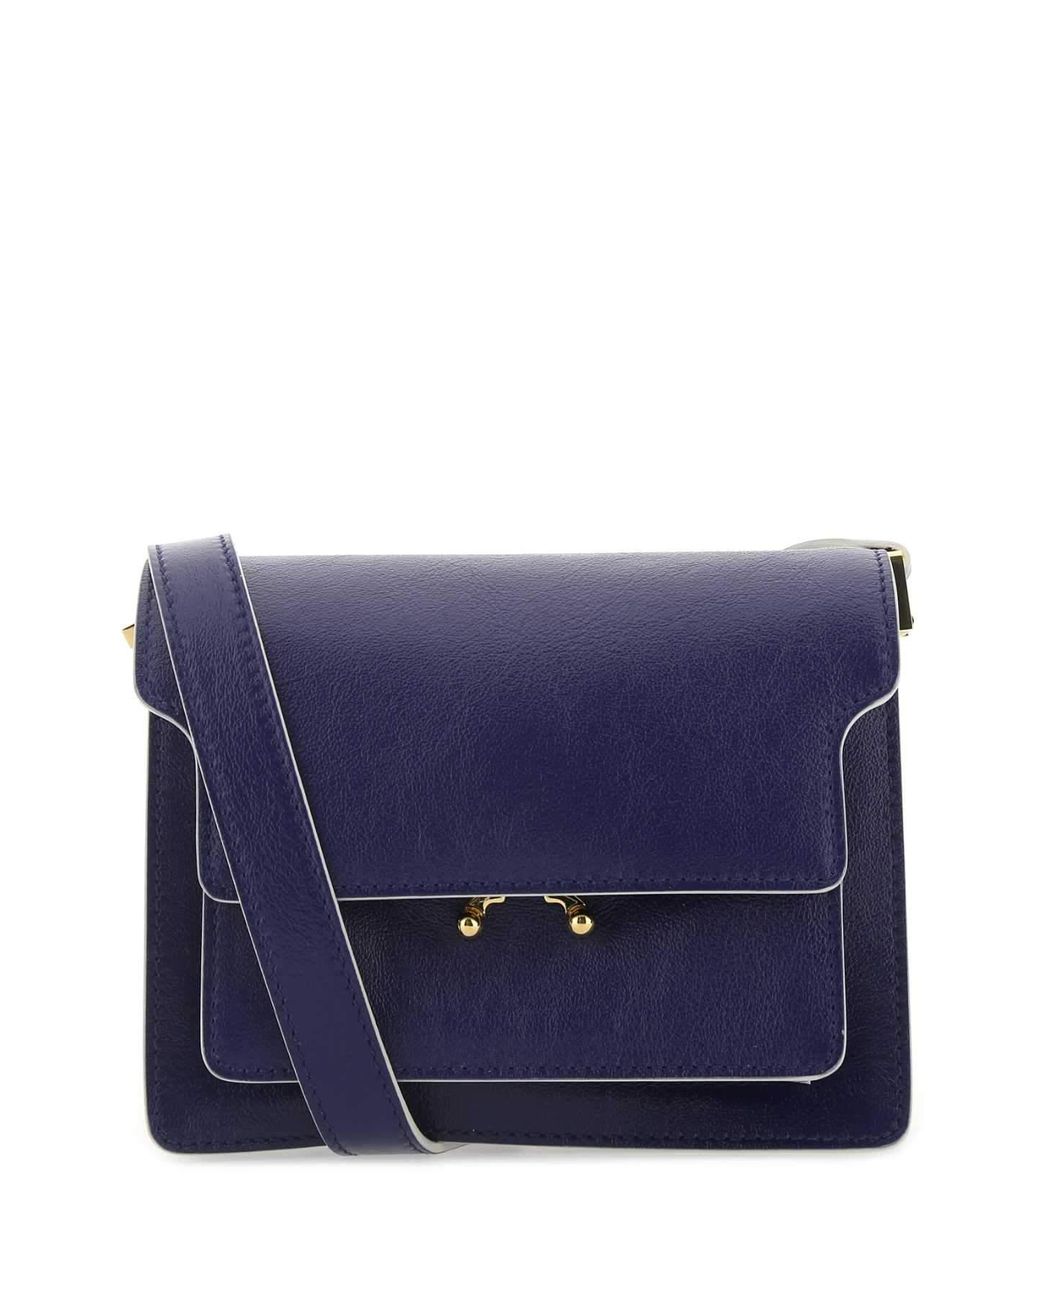 Marni Cotton Soft Trunk Mini Shoulder Bag in Blue - Lyst